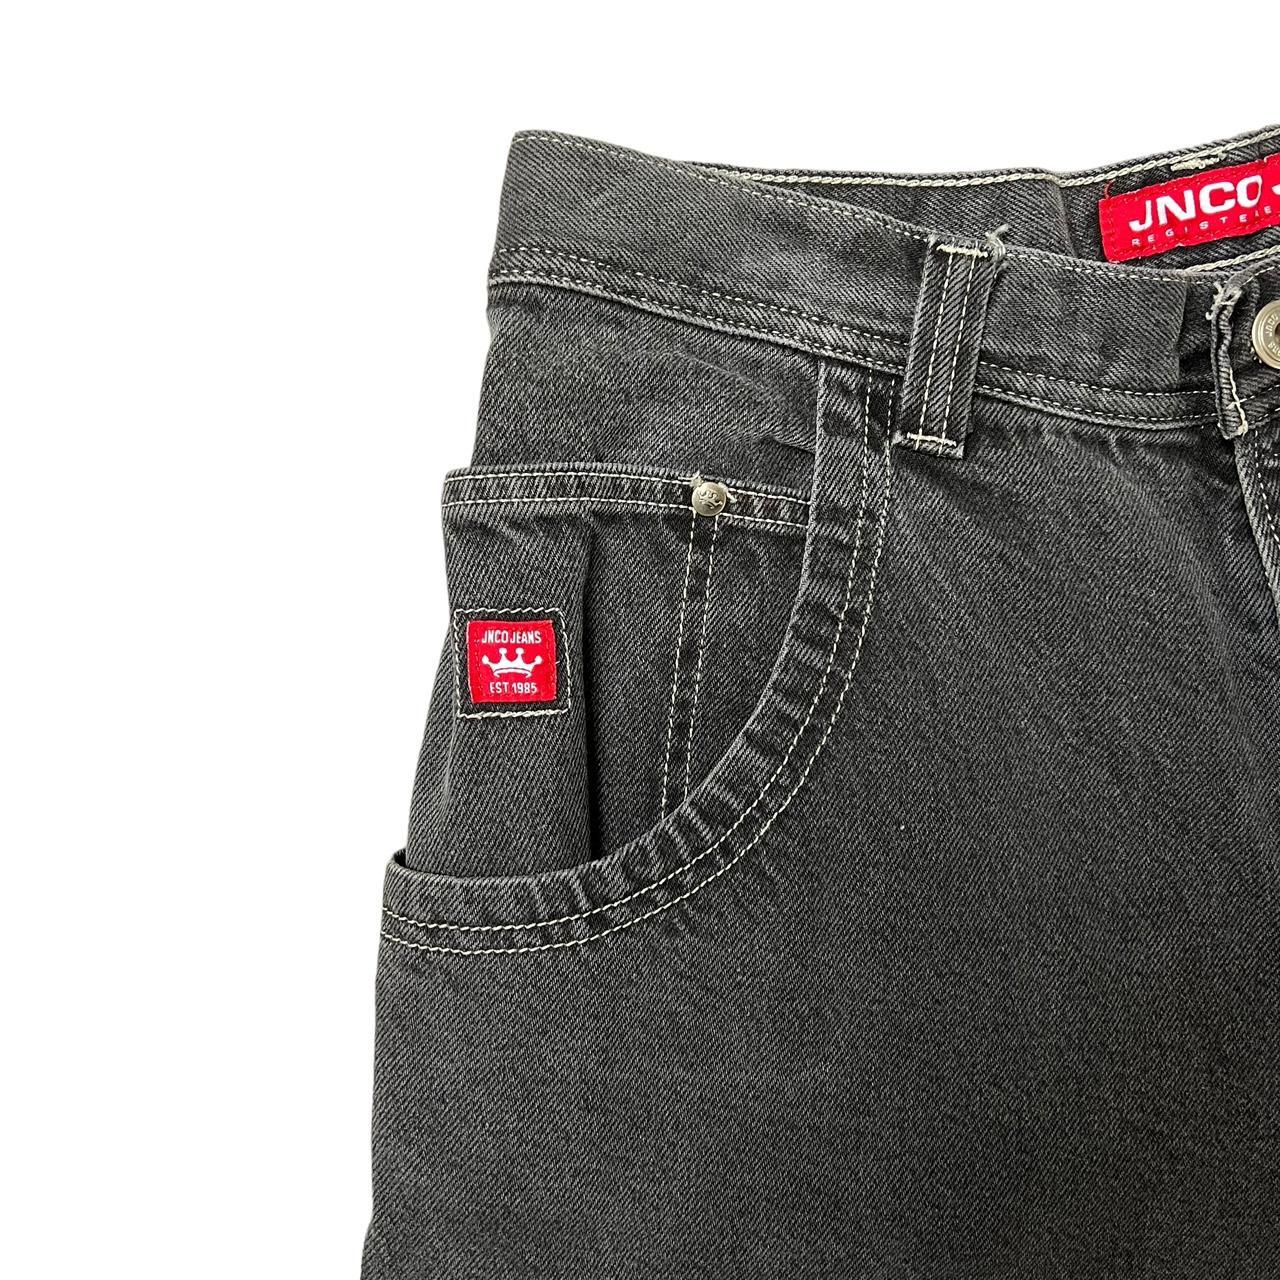 JNCO Men's Black and Grey Shorts | Depop